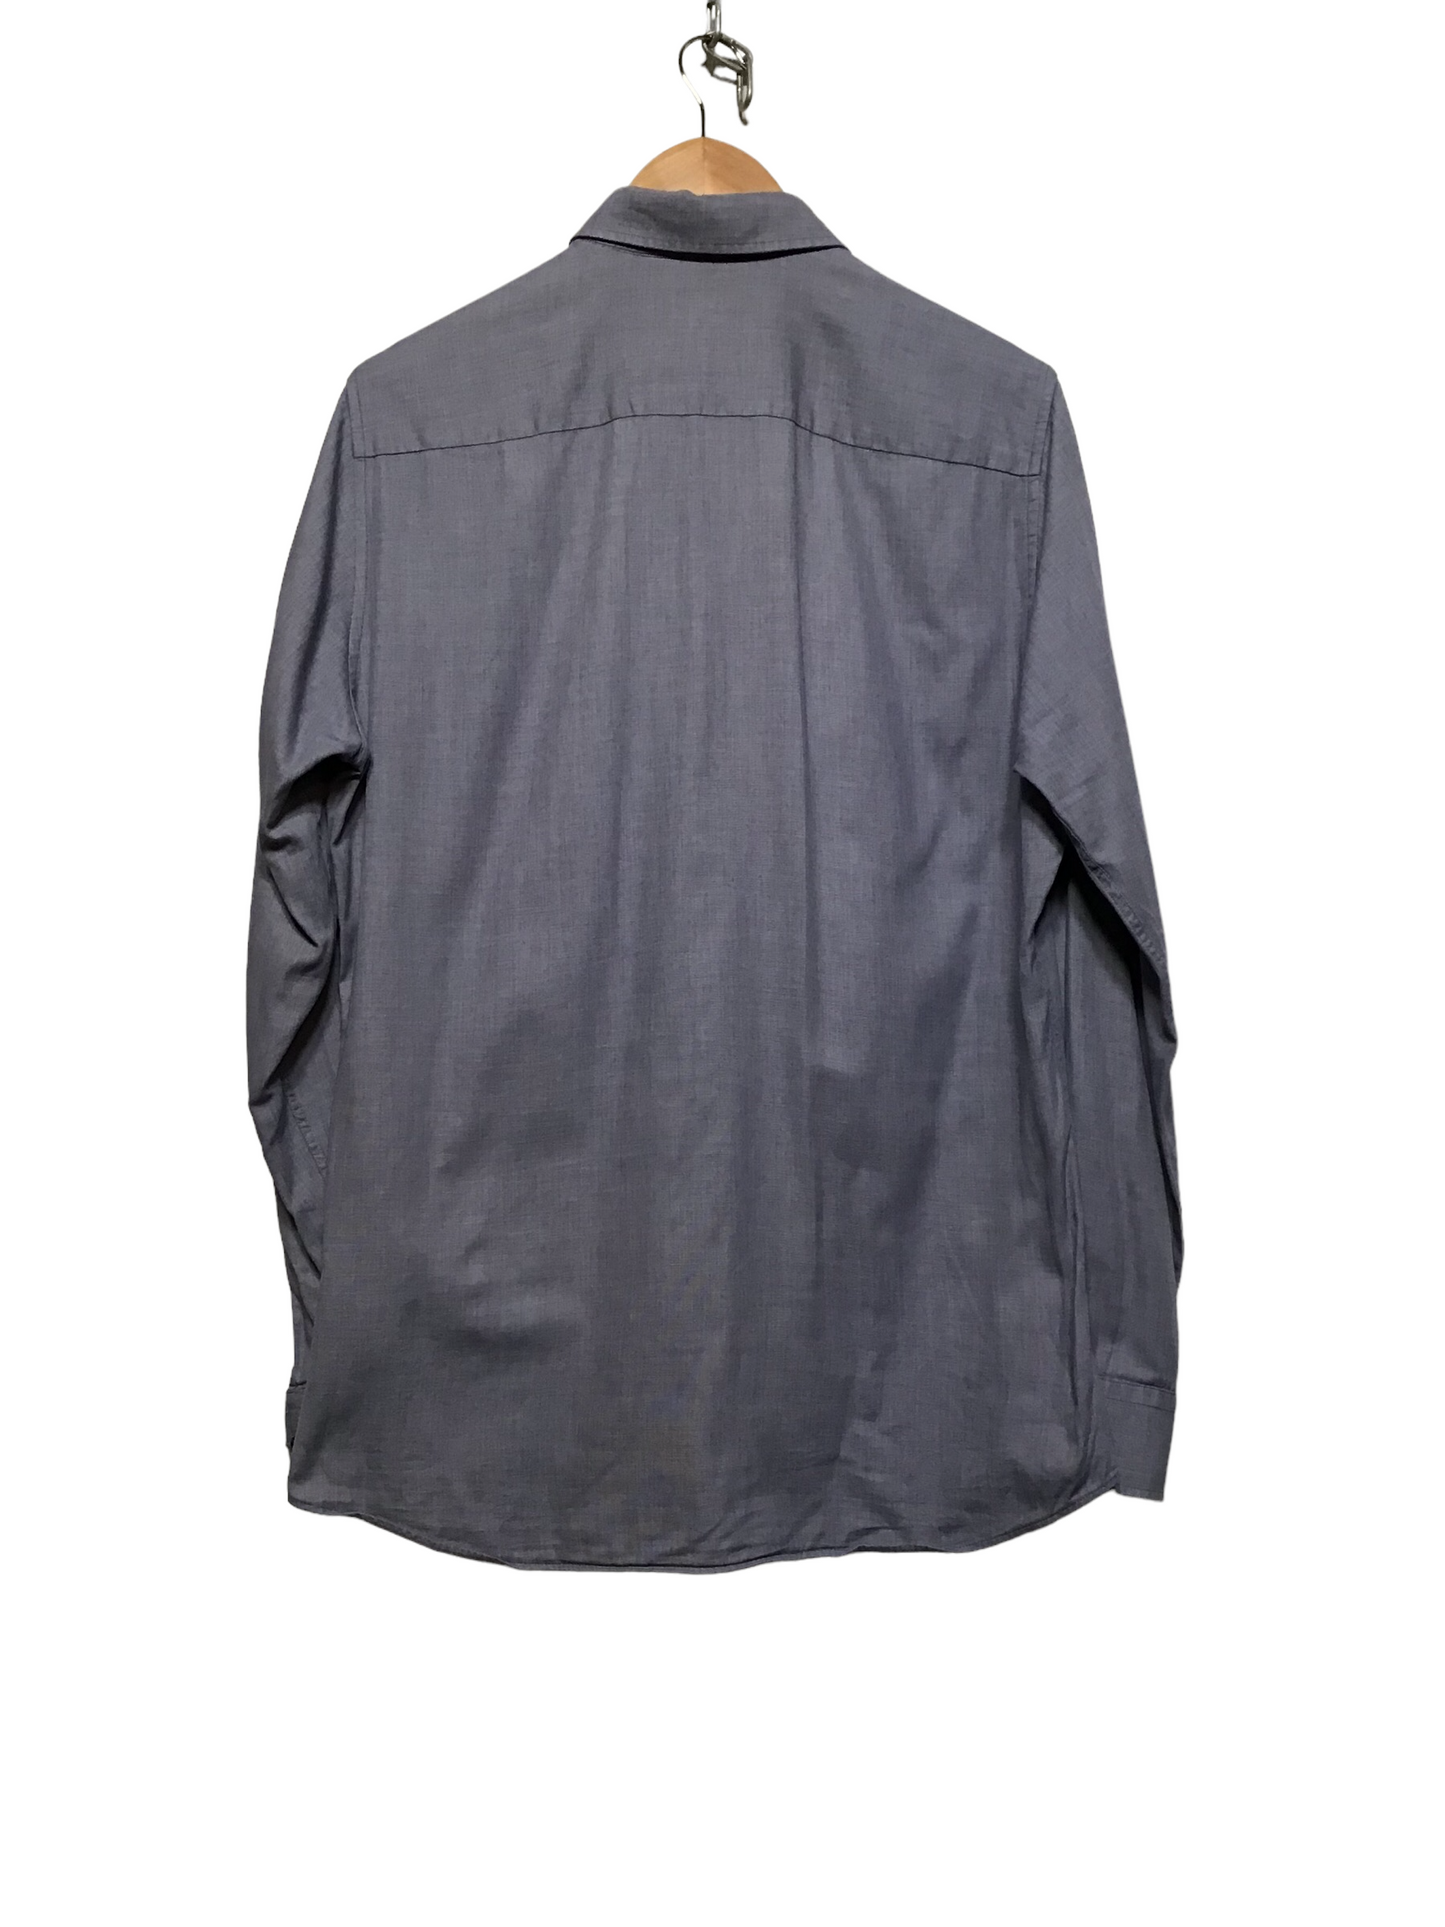 Grey Joop Shirt (Size S)